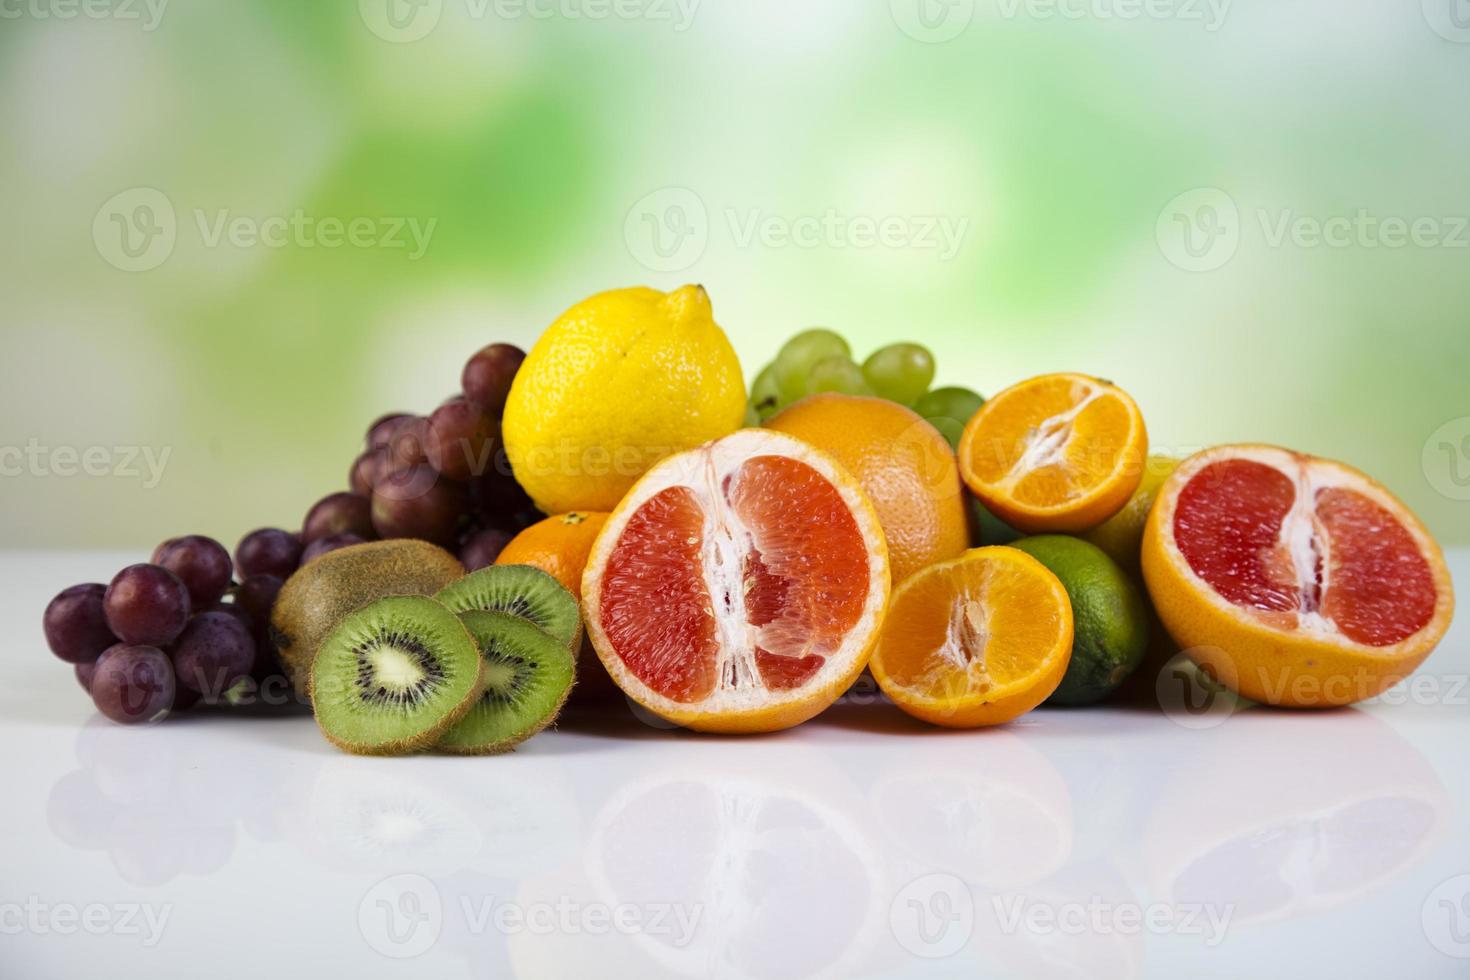 Fruits, vegetables, fruit juices, vegetable juices, healthy food photo